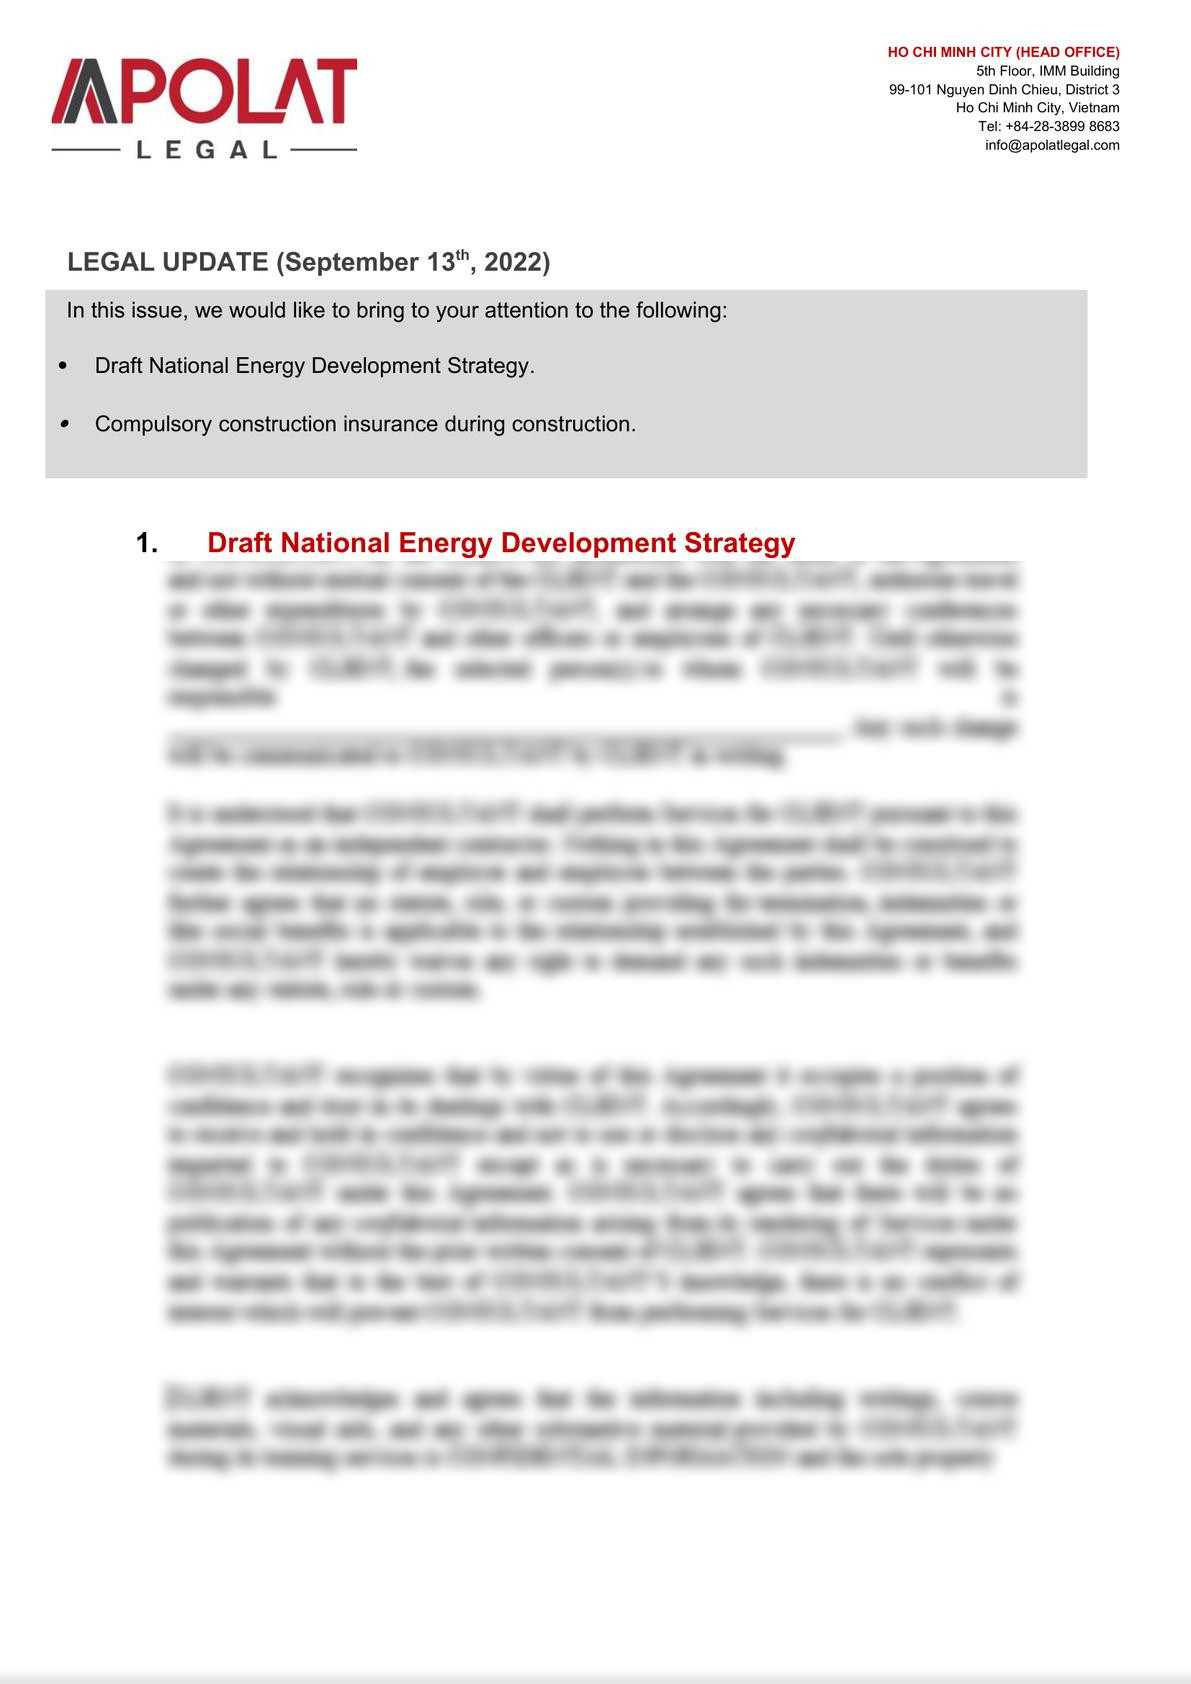 Legal udpate: Draft National Energy Development Strategy-0